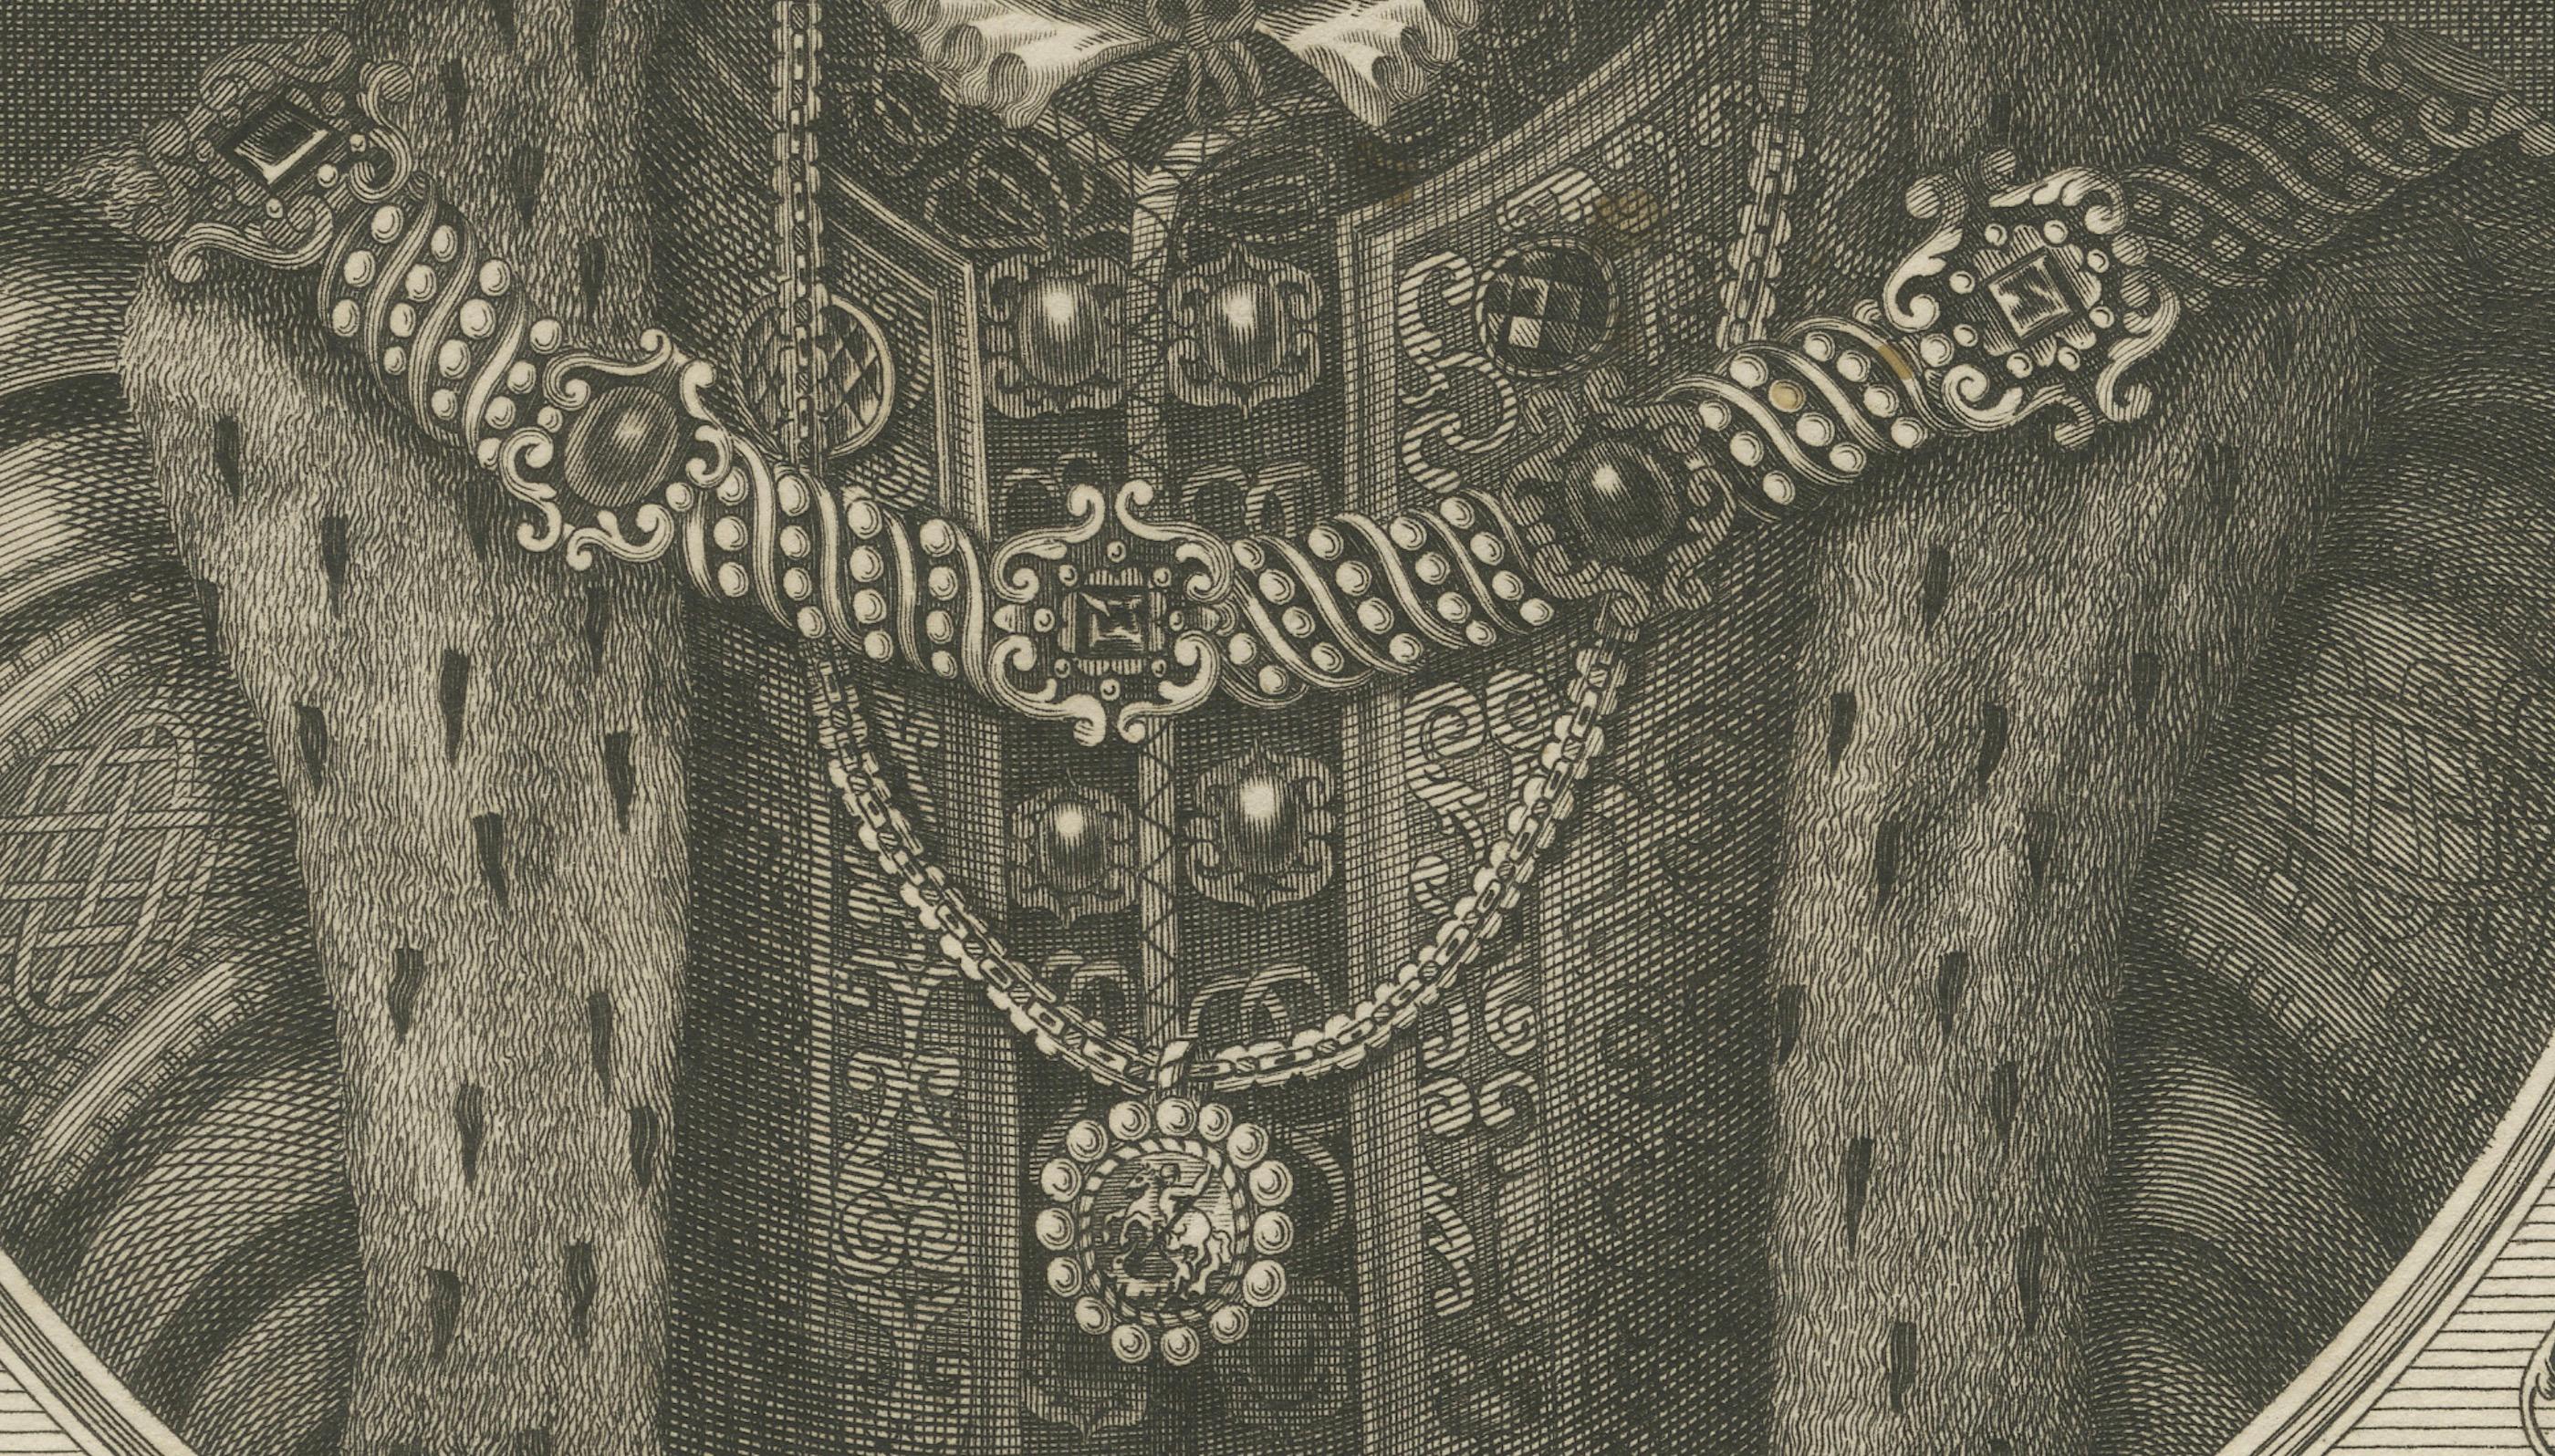 Paper 1784 Engraved Portrait of Henry VIII - Tudor Power and Prestige For Sale